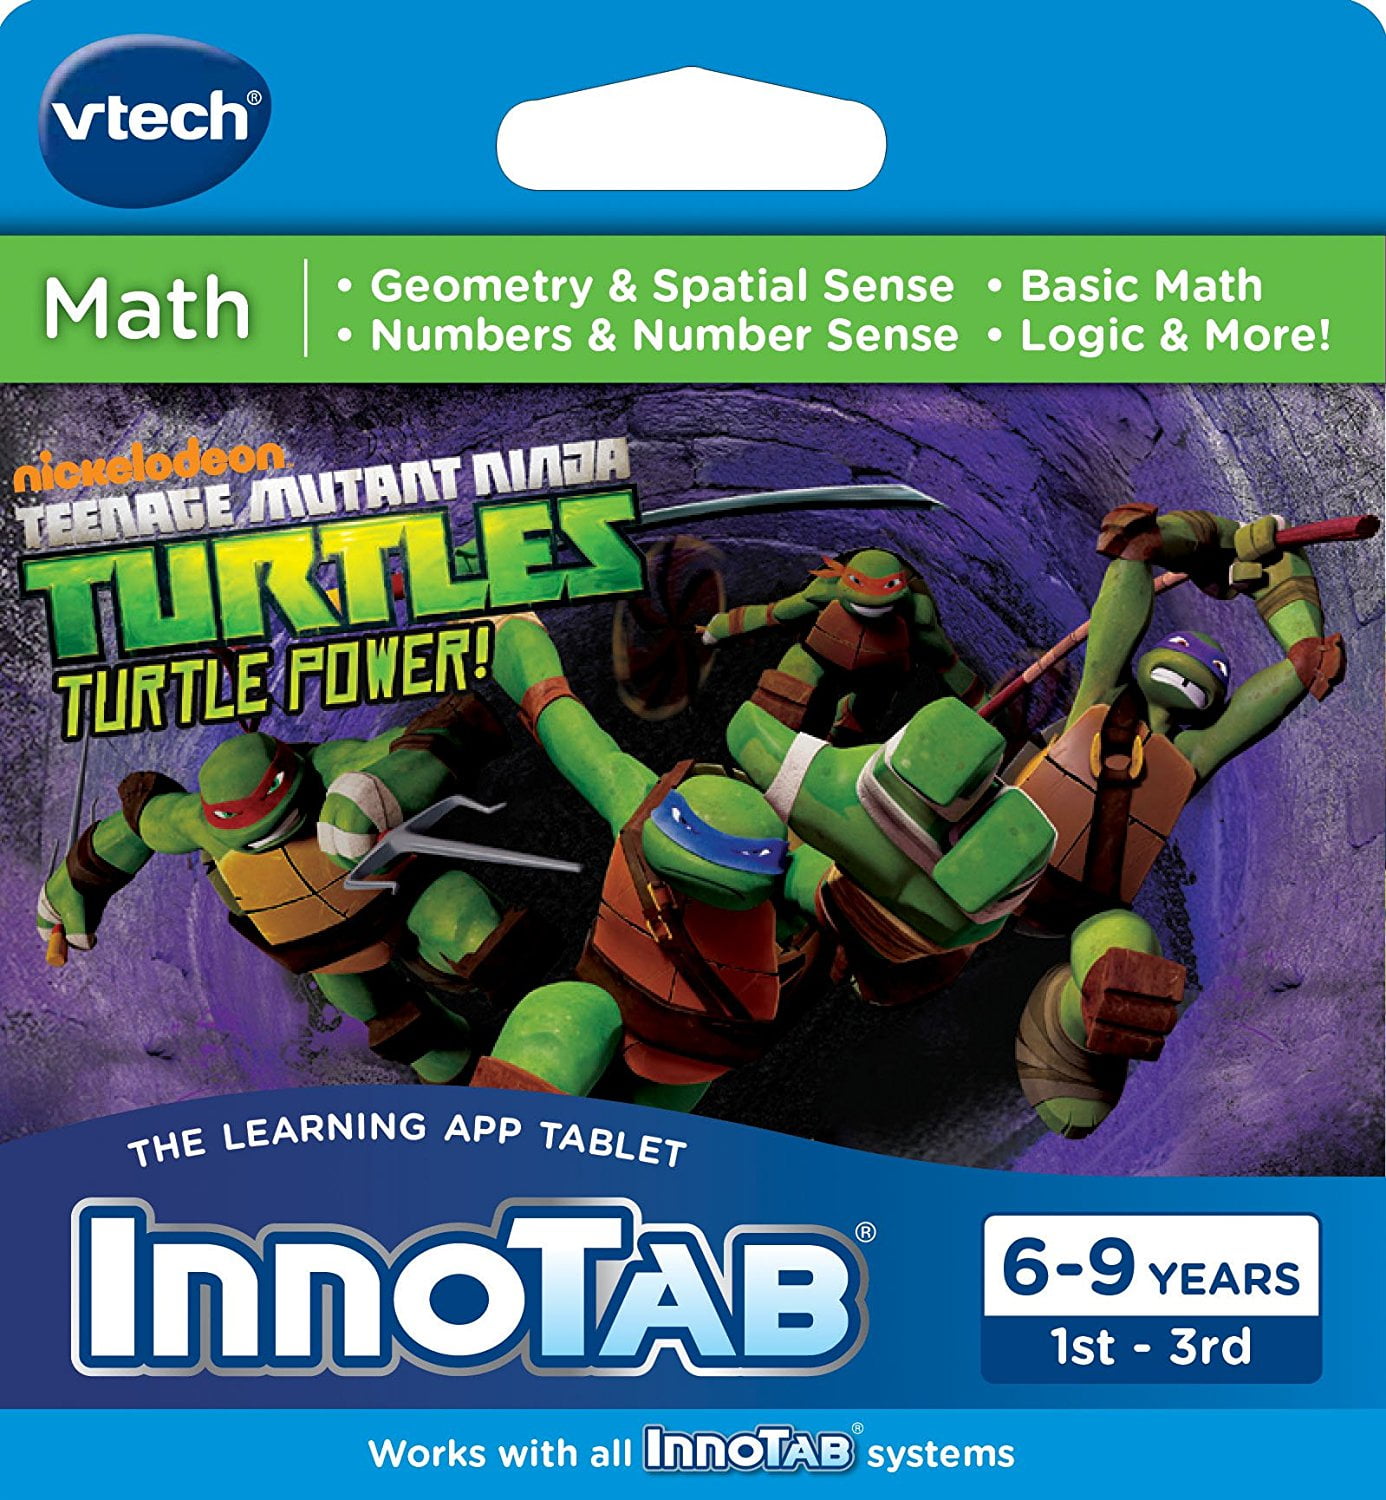 New! Vtech Innotab Game Teenage Mutant Ninja Turtles Match age 6-9 grades 1-3 